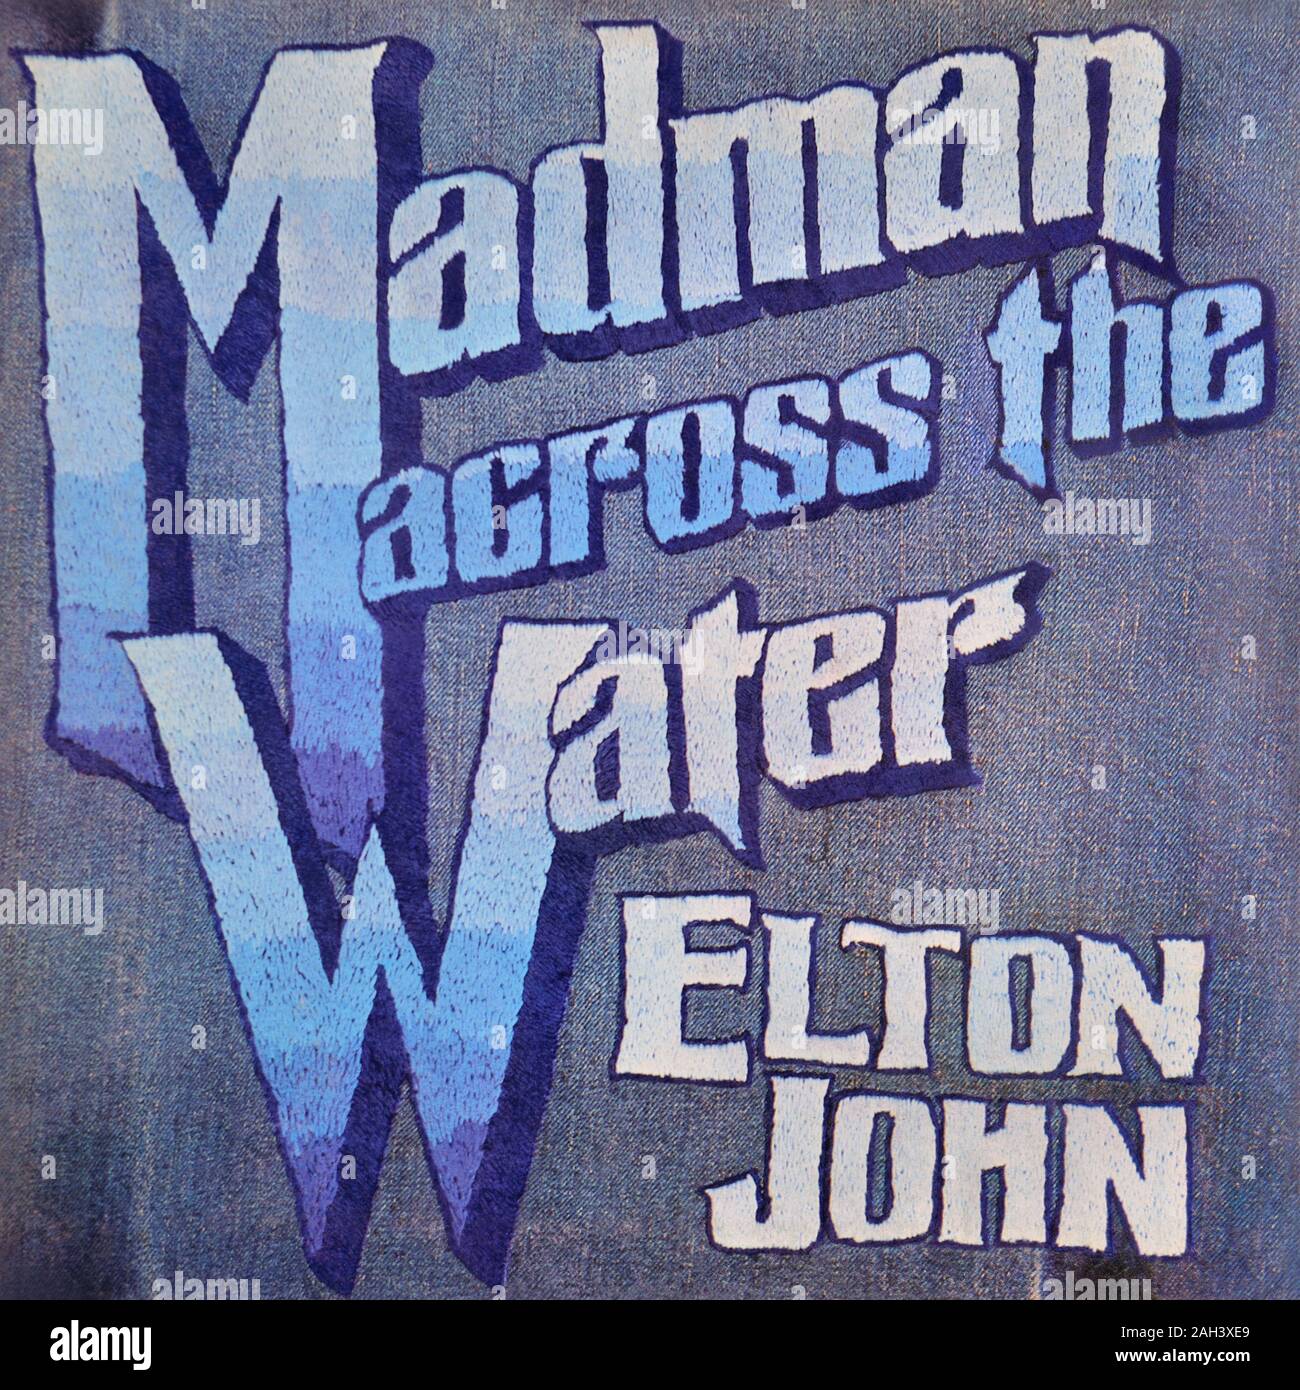 Elton John - original Vinyl Album Cover - Madman Across the Water - 1971 Stockfoto